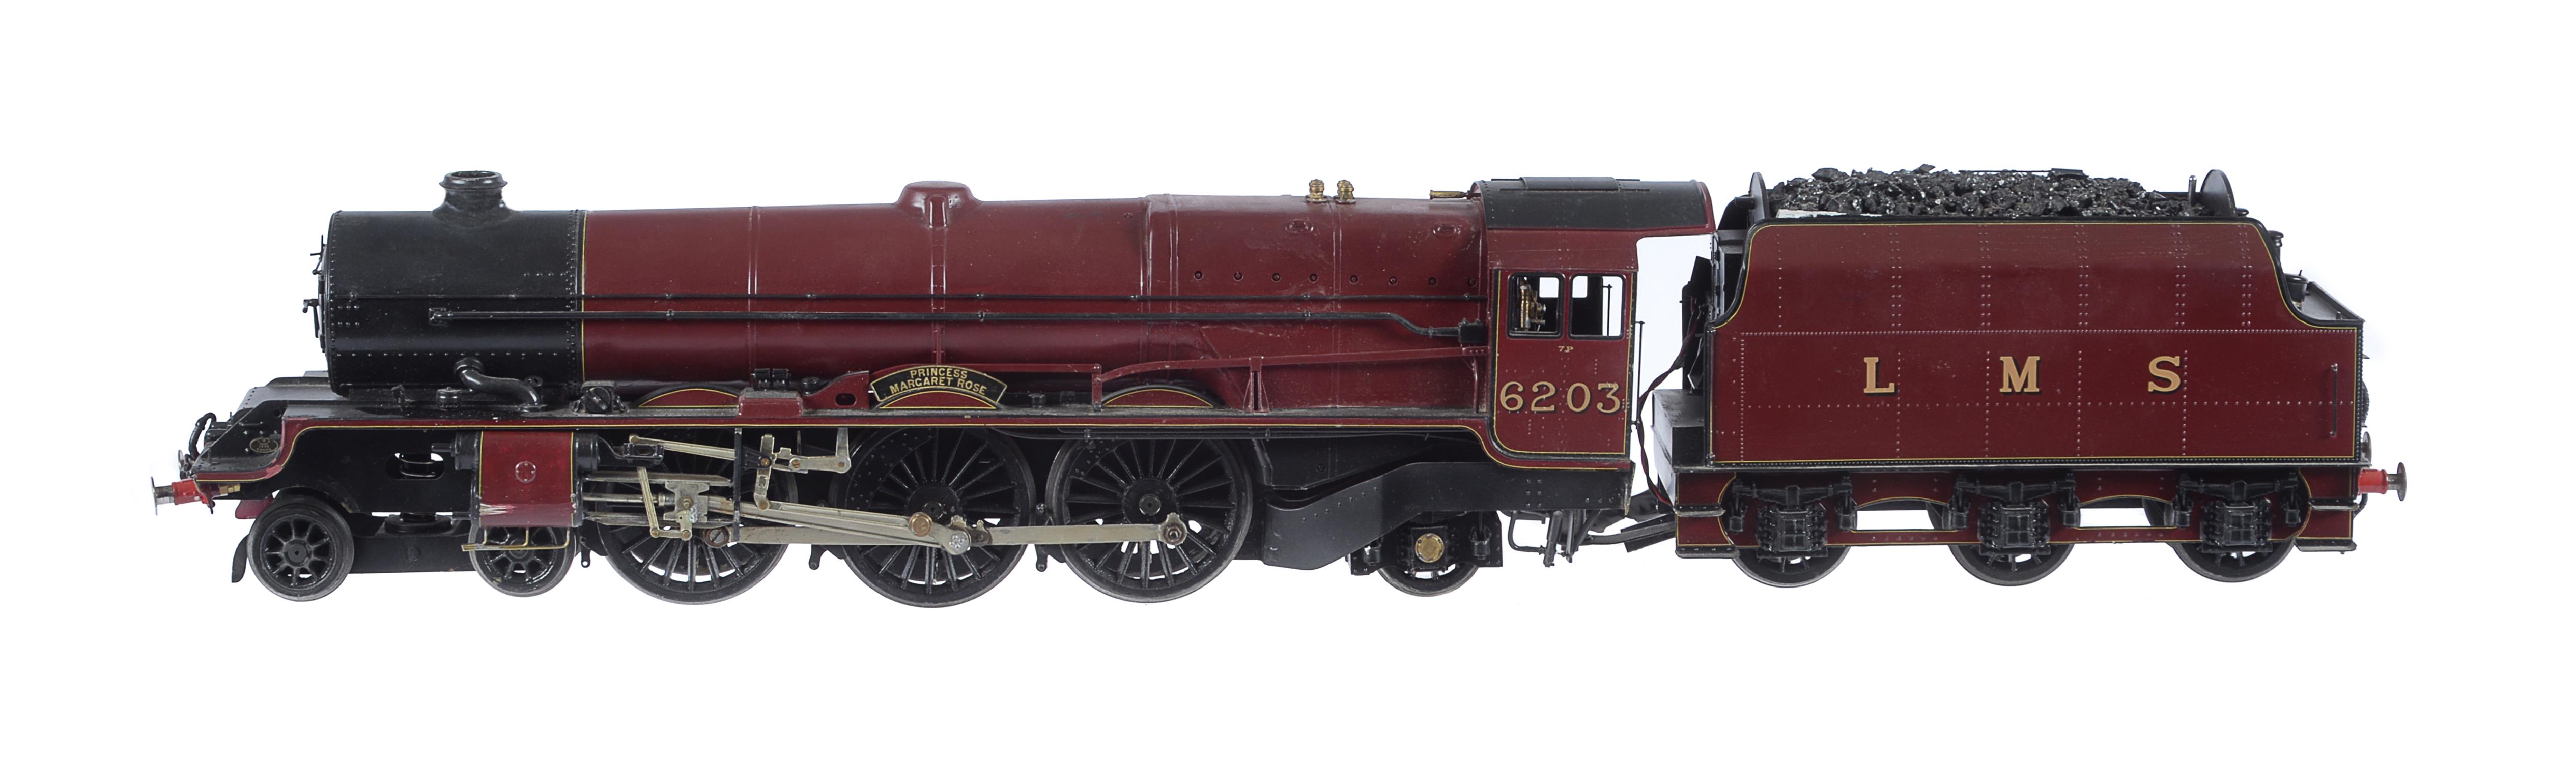 A fine gauge 1 model of a Princess Class tender locomotive No 6203 - Image 2 of 4